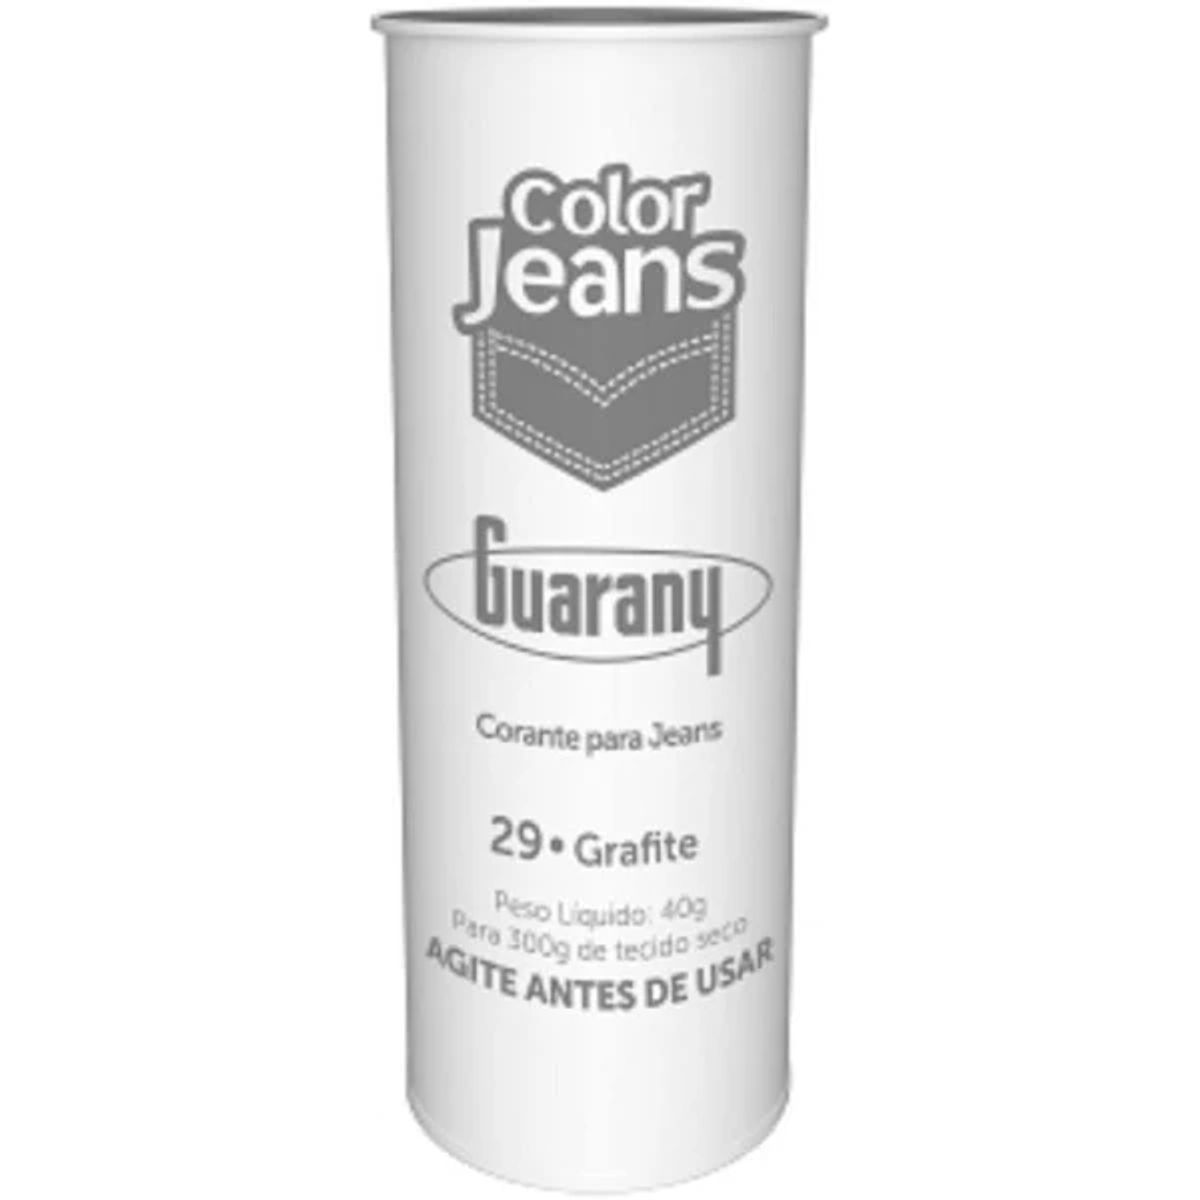 Corante Color Jeans Guarany Grafite 40g image number 0